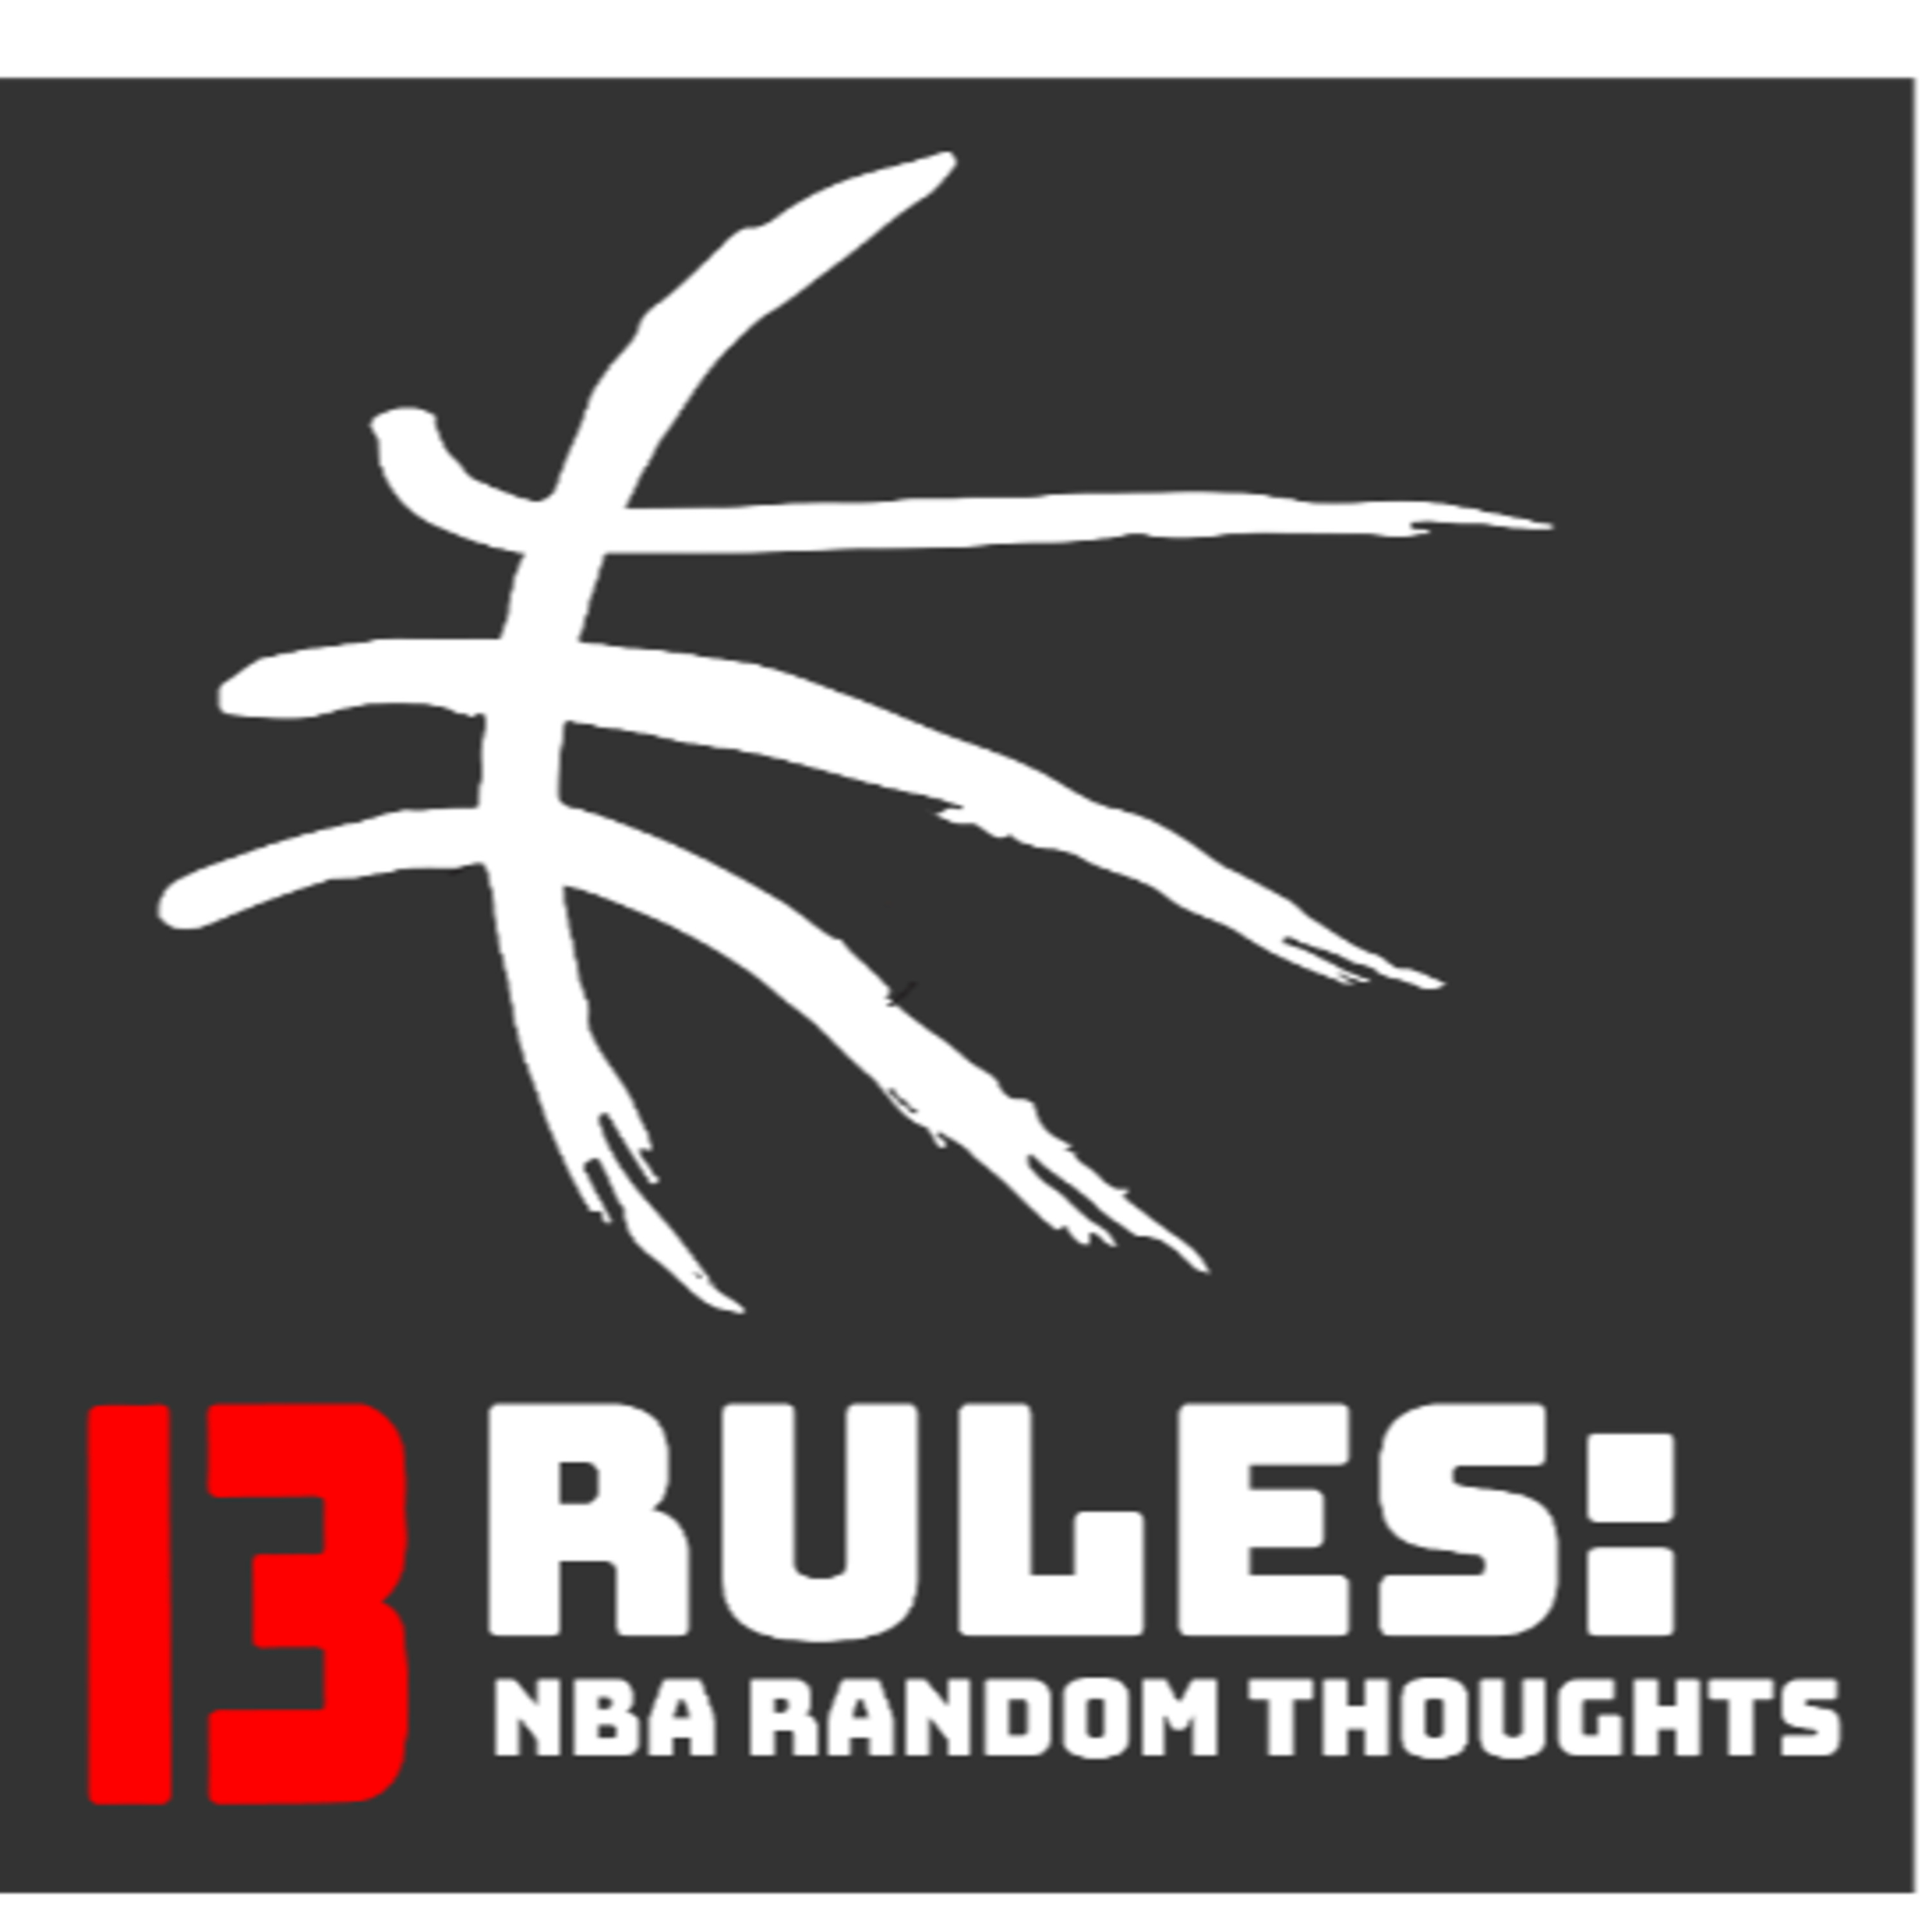 13 Rules: NBA Random Thoughts